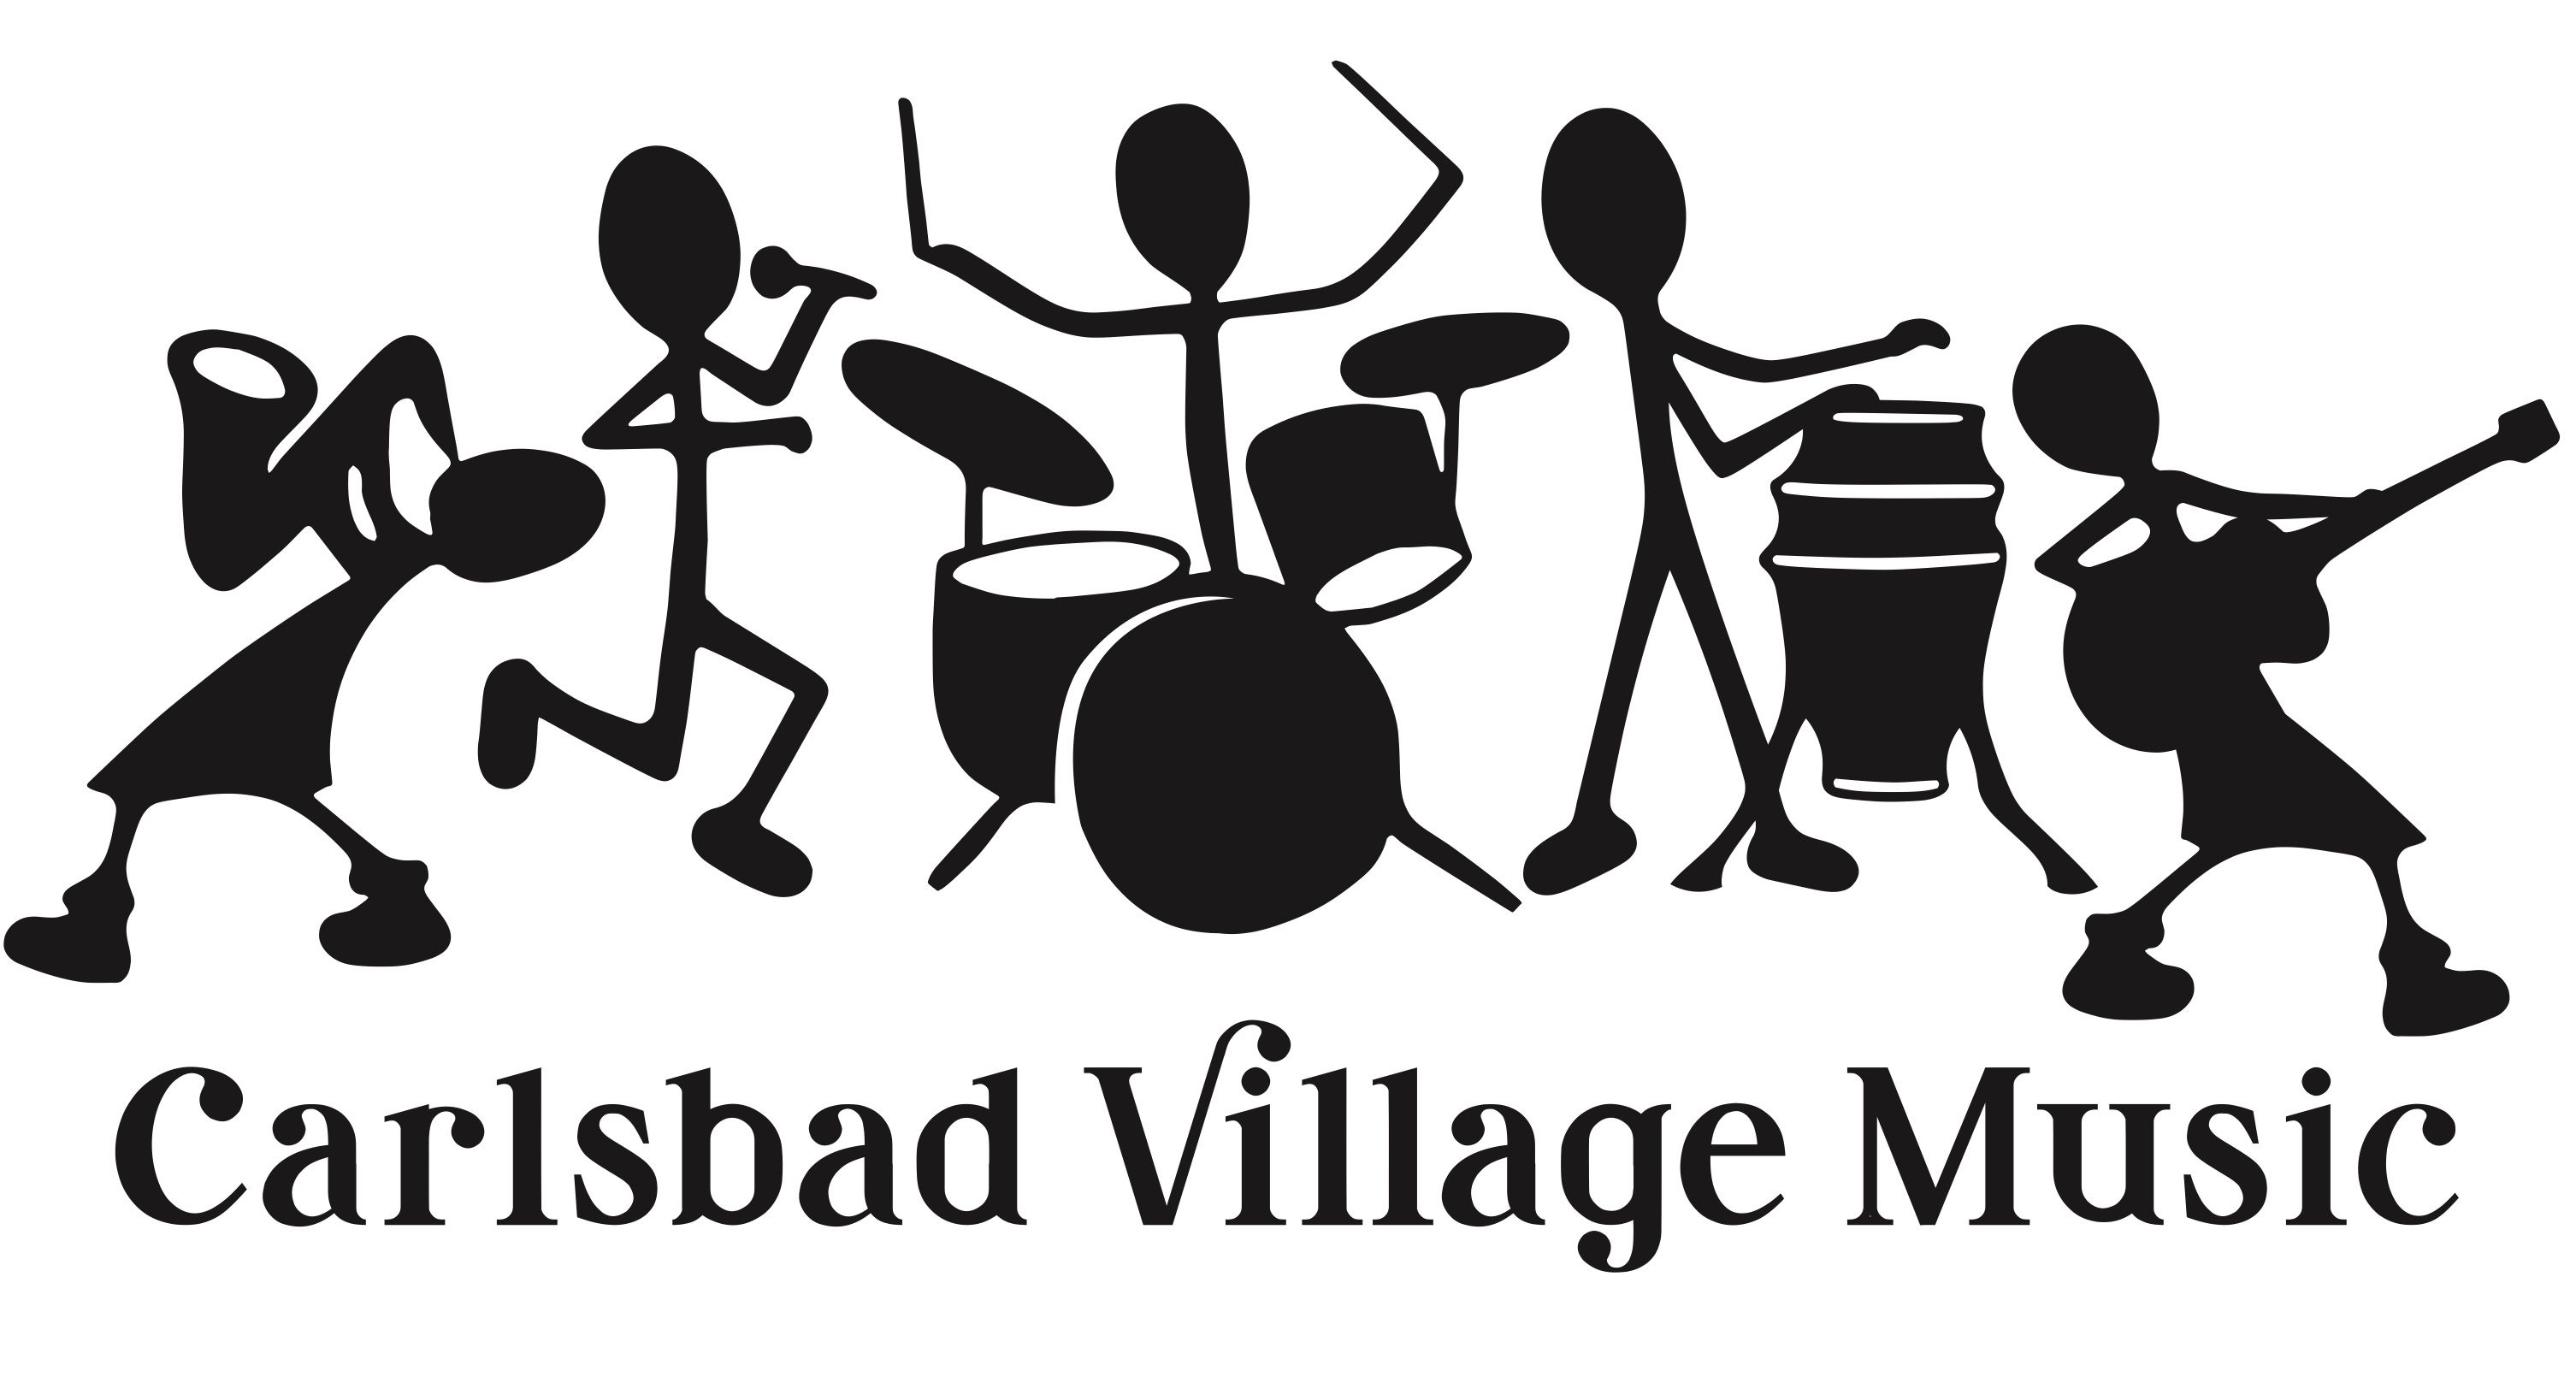 Carlsbad Village Music